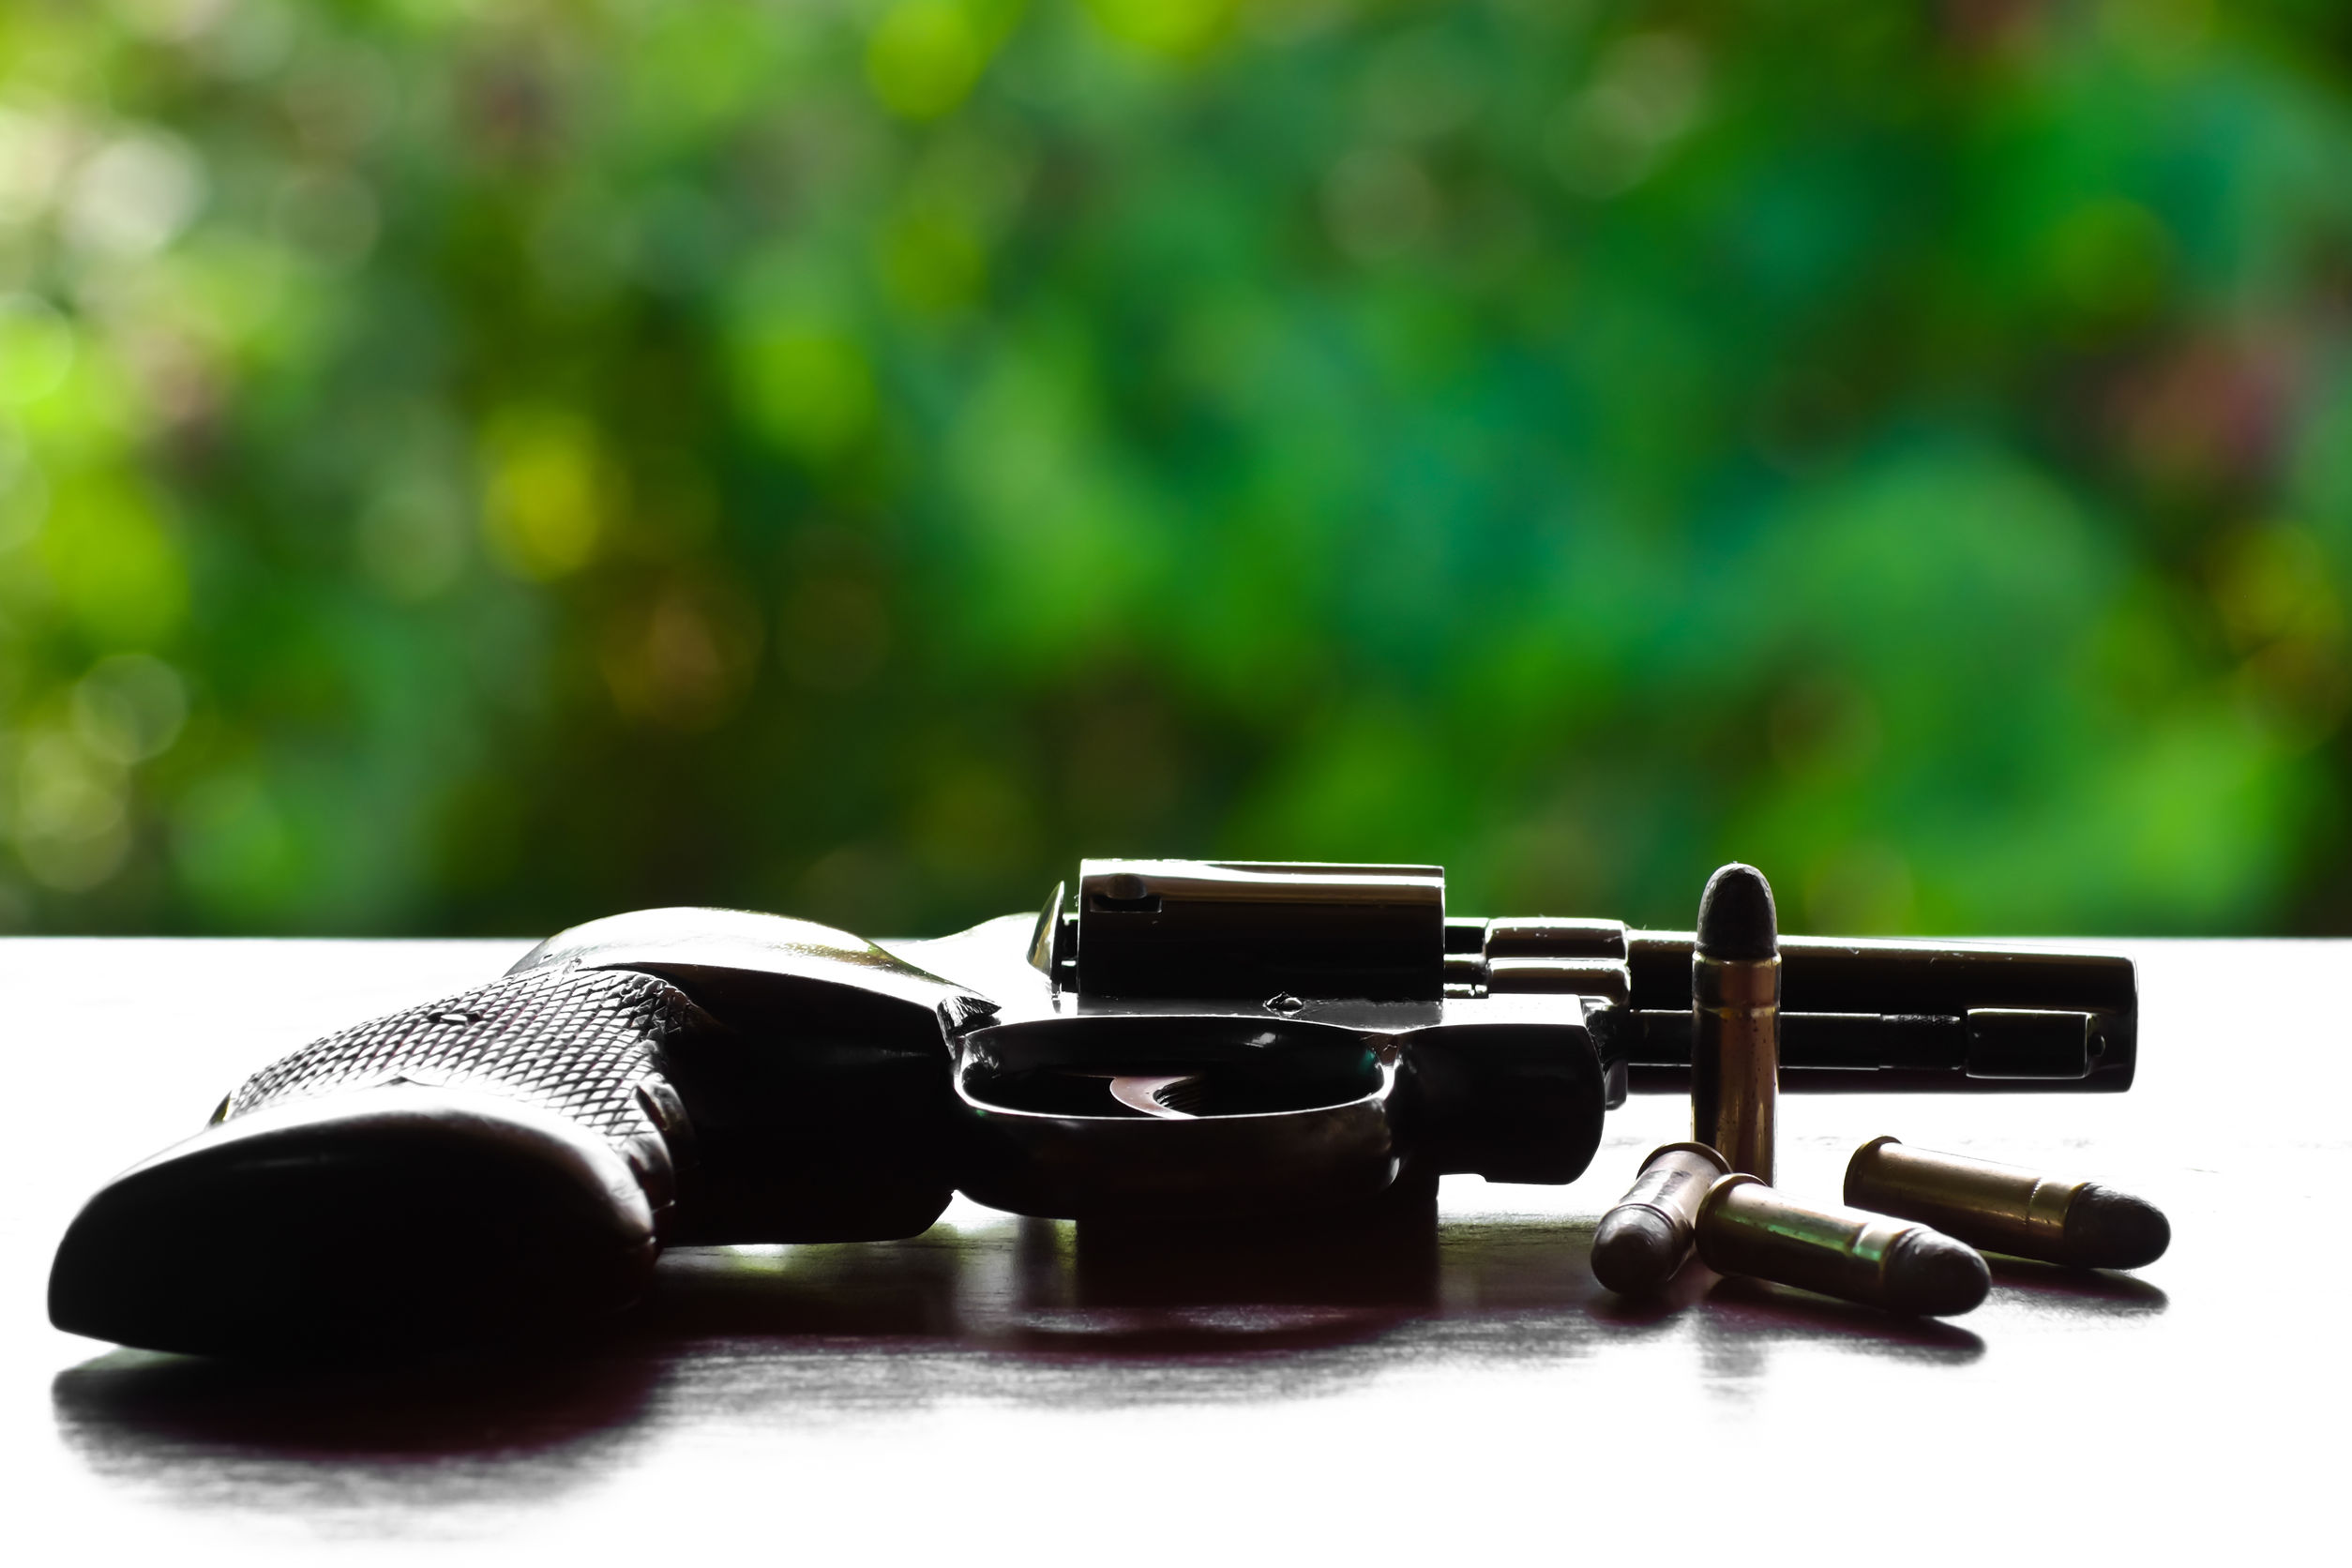 America's Other Gun Problem: Defective Firearms